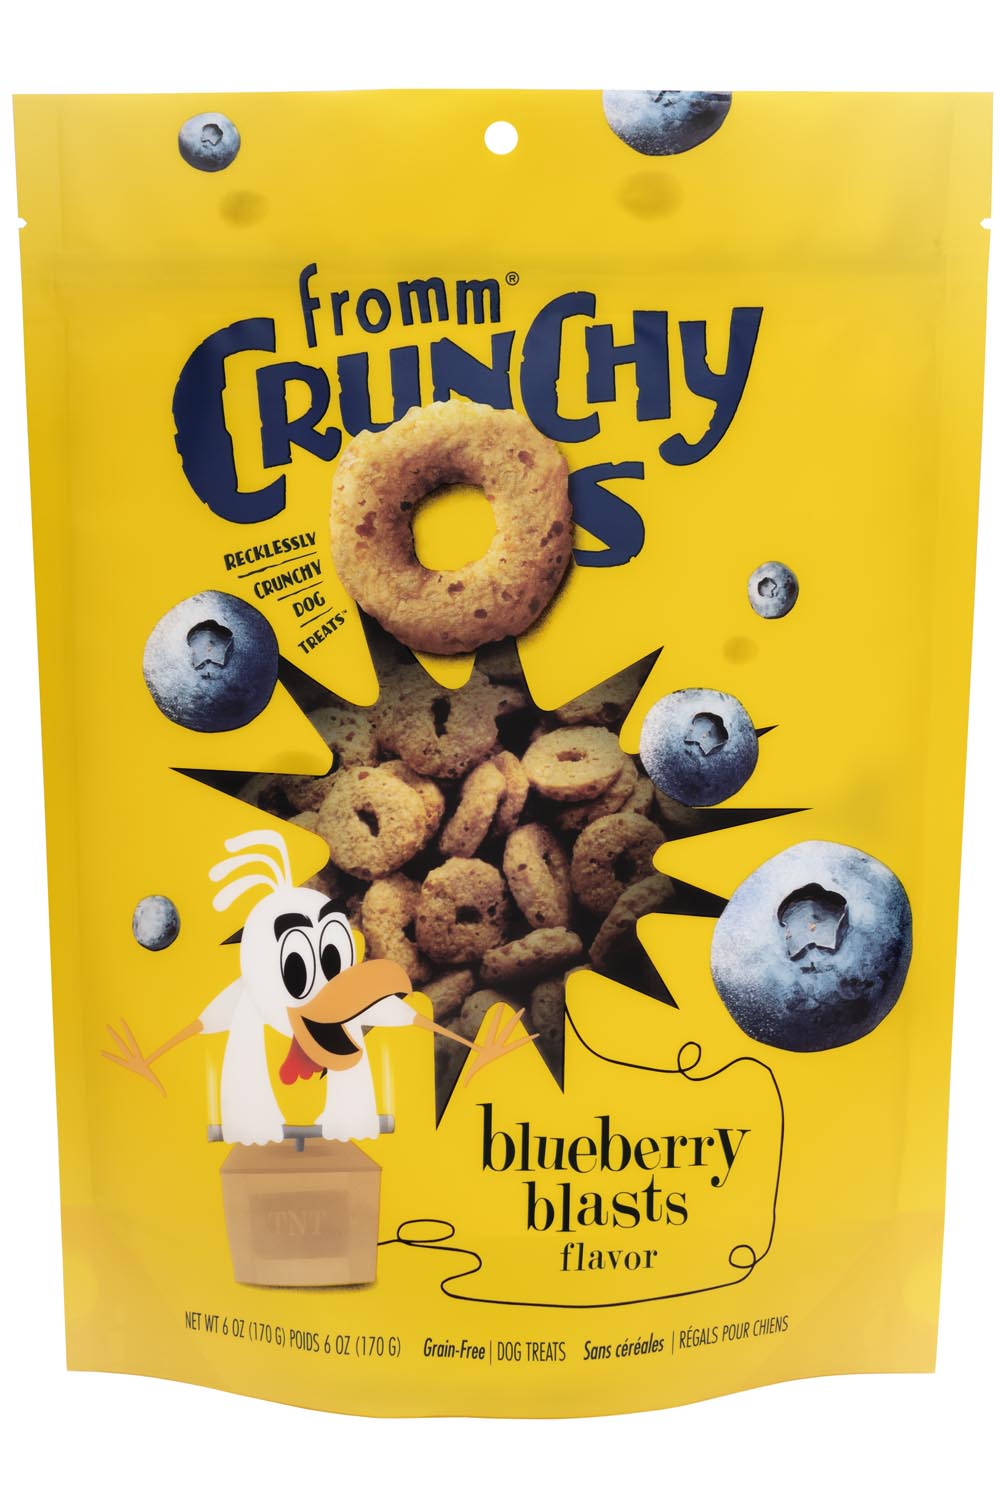 Fromm Crunchy O's Blueberry Blasts Flavor Dog Treats, 6 oz